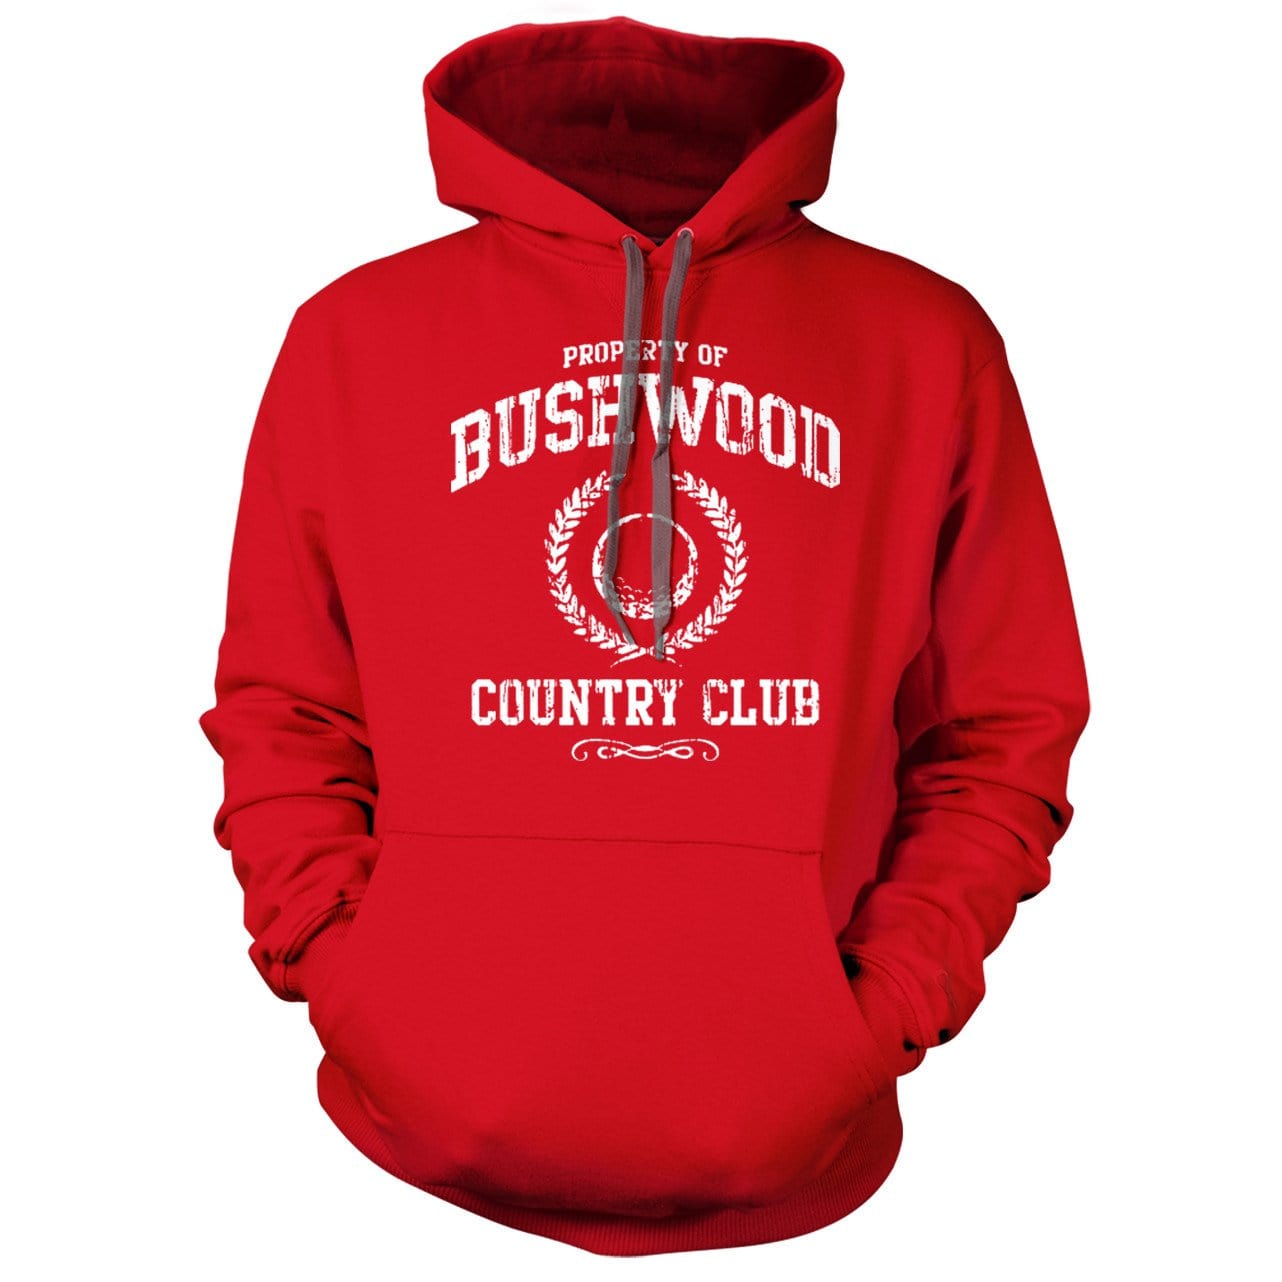 Bushwood Country Culb Caddyshack Red Hoodie - We Got Teez